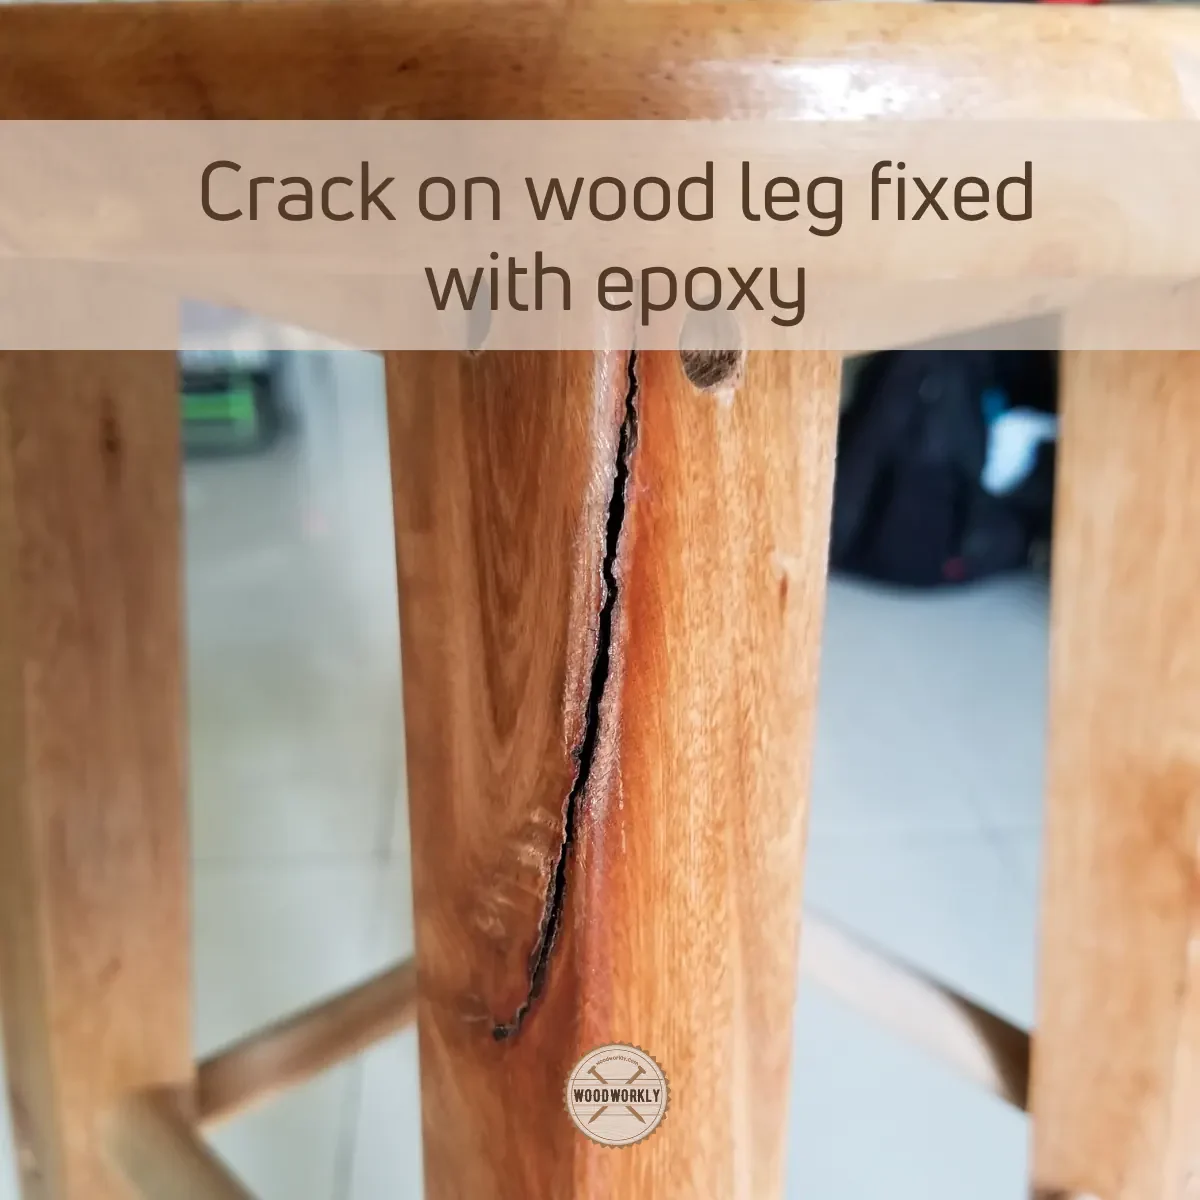 Crack on wood leg fixed with epoxy